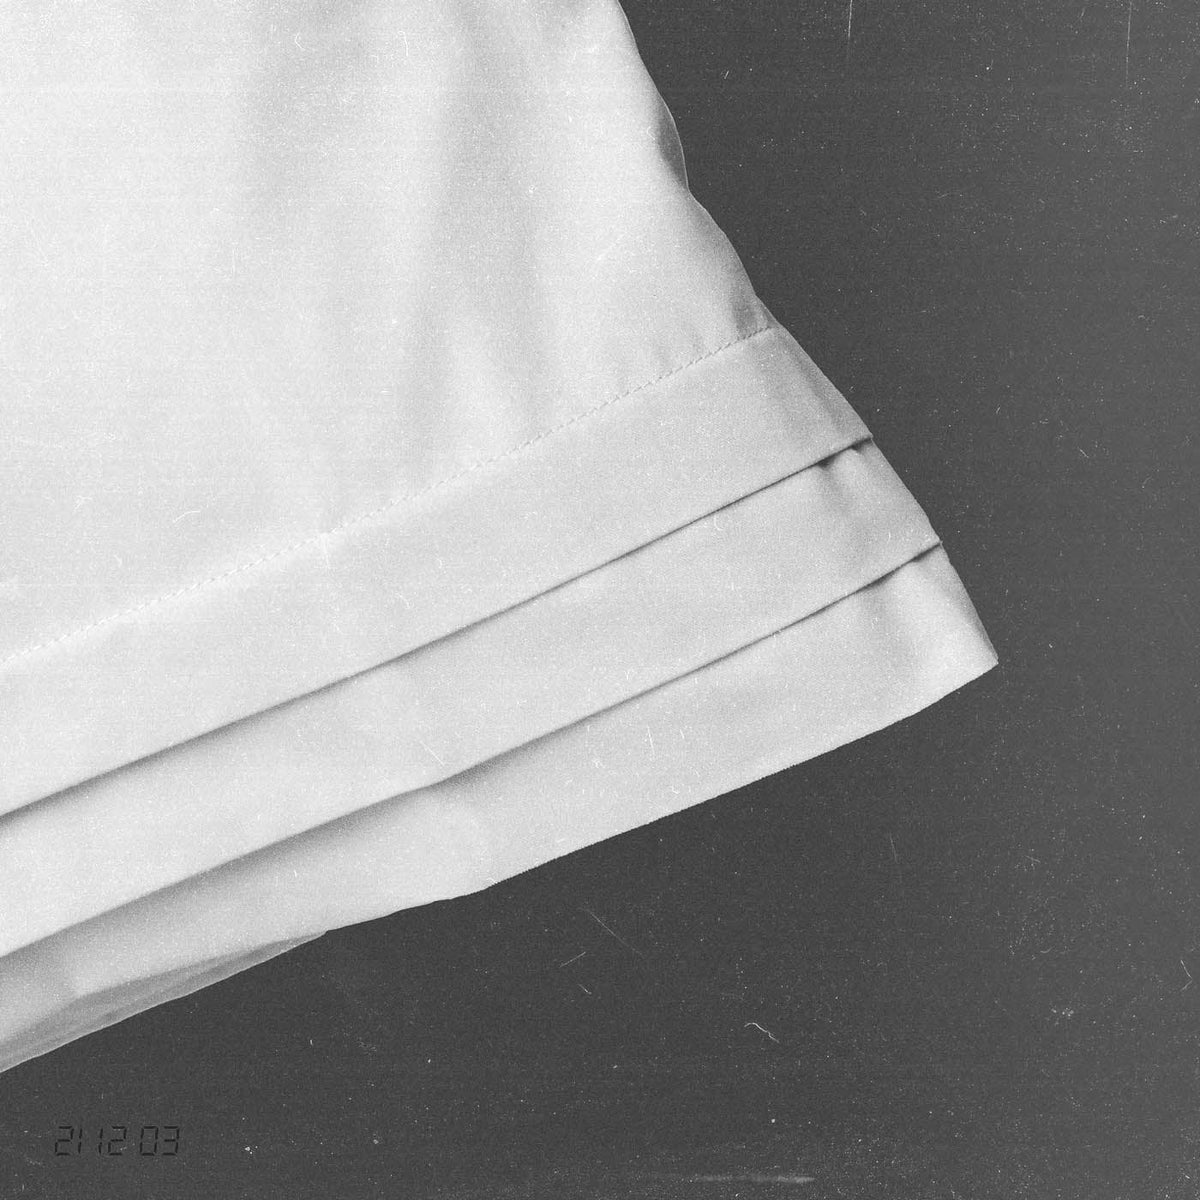 The Pillowcases | Supima Sateen - Stone Grey - Juniper